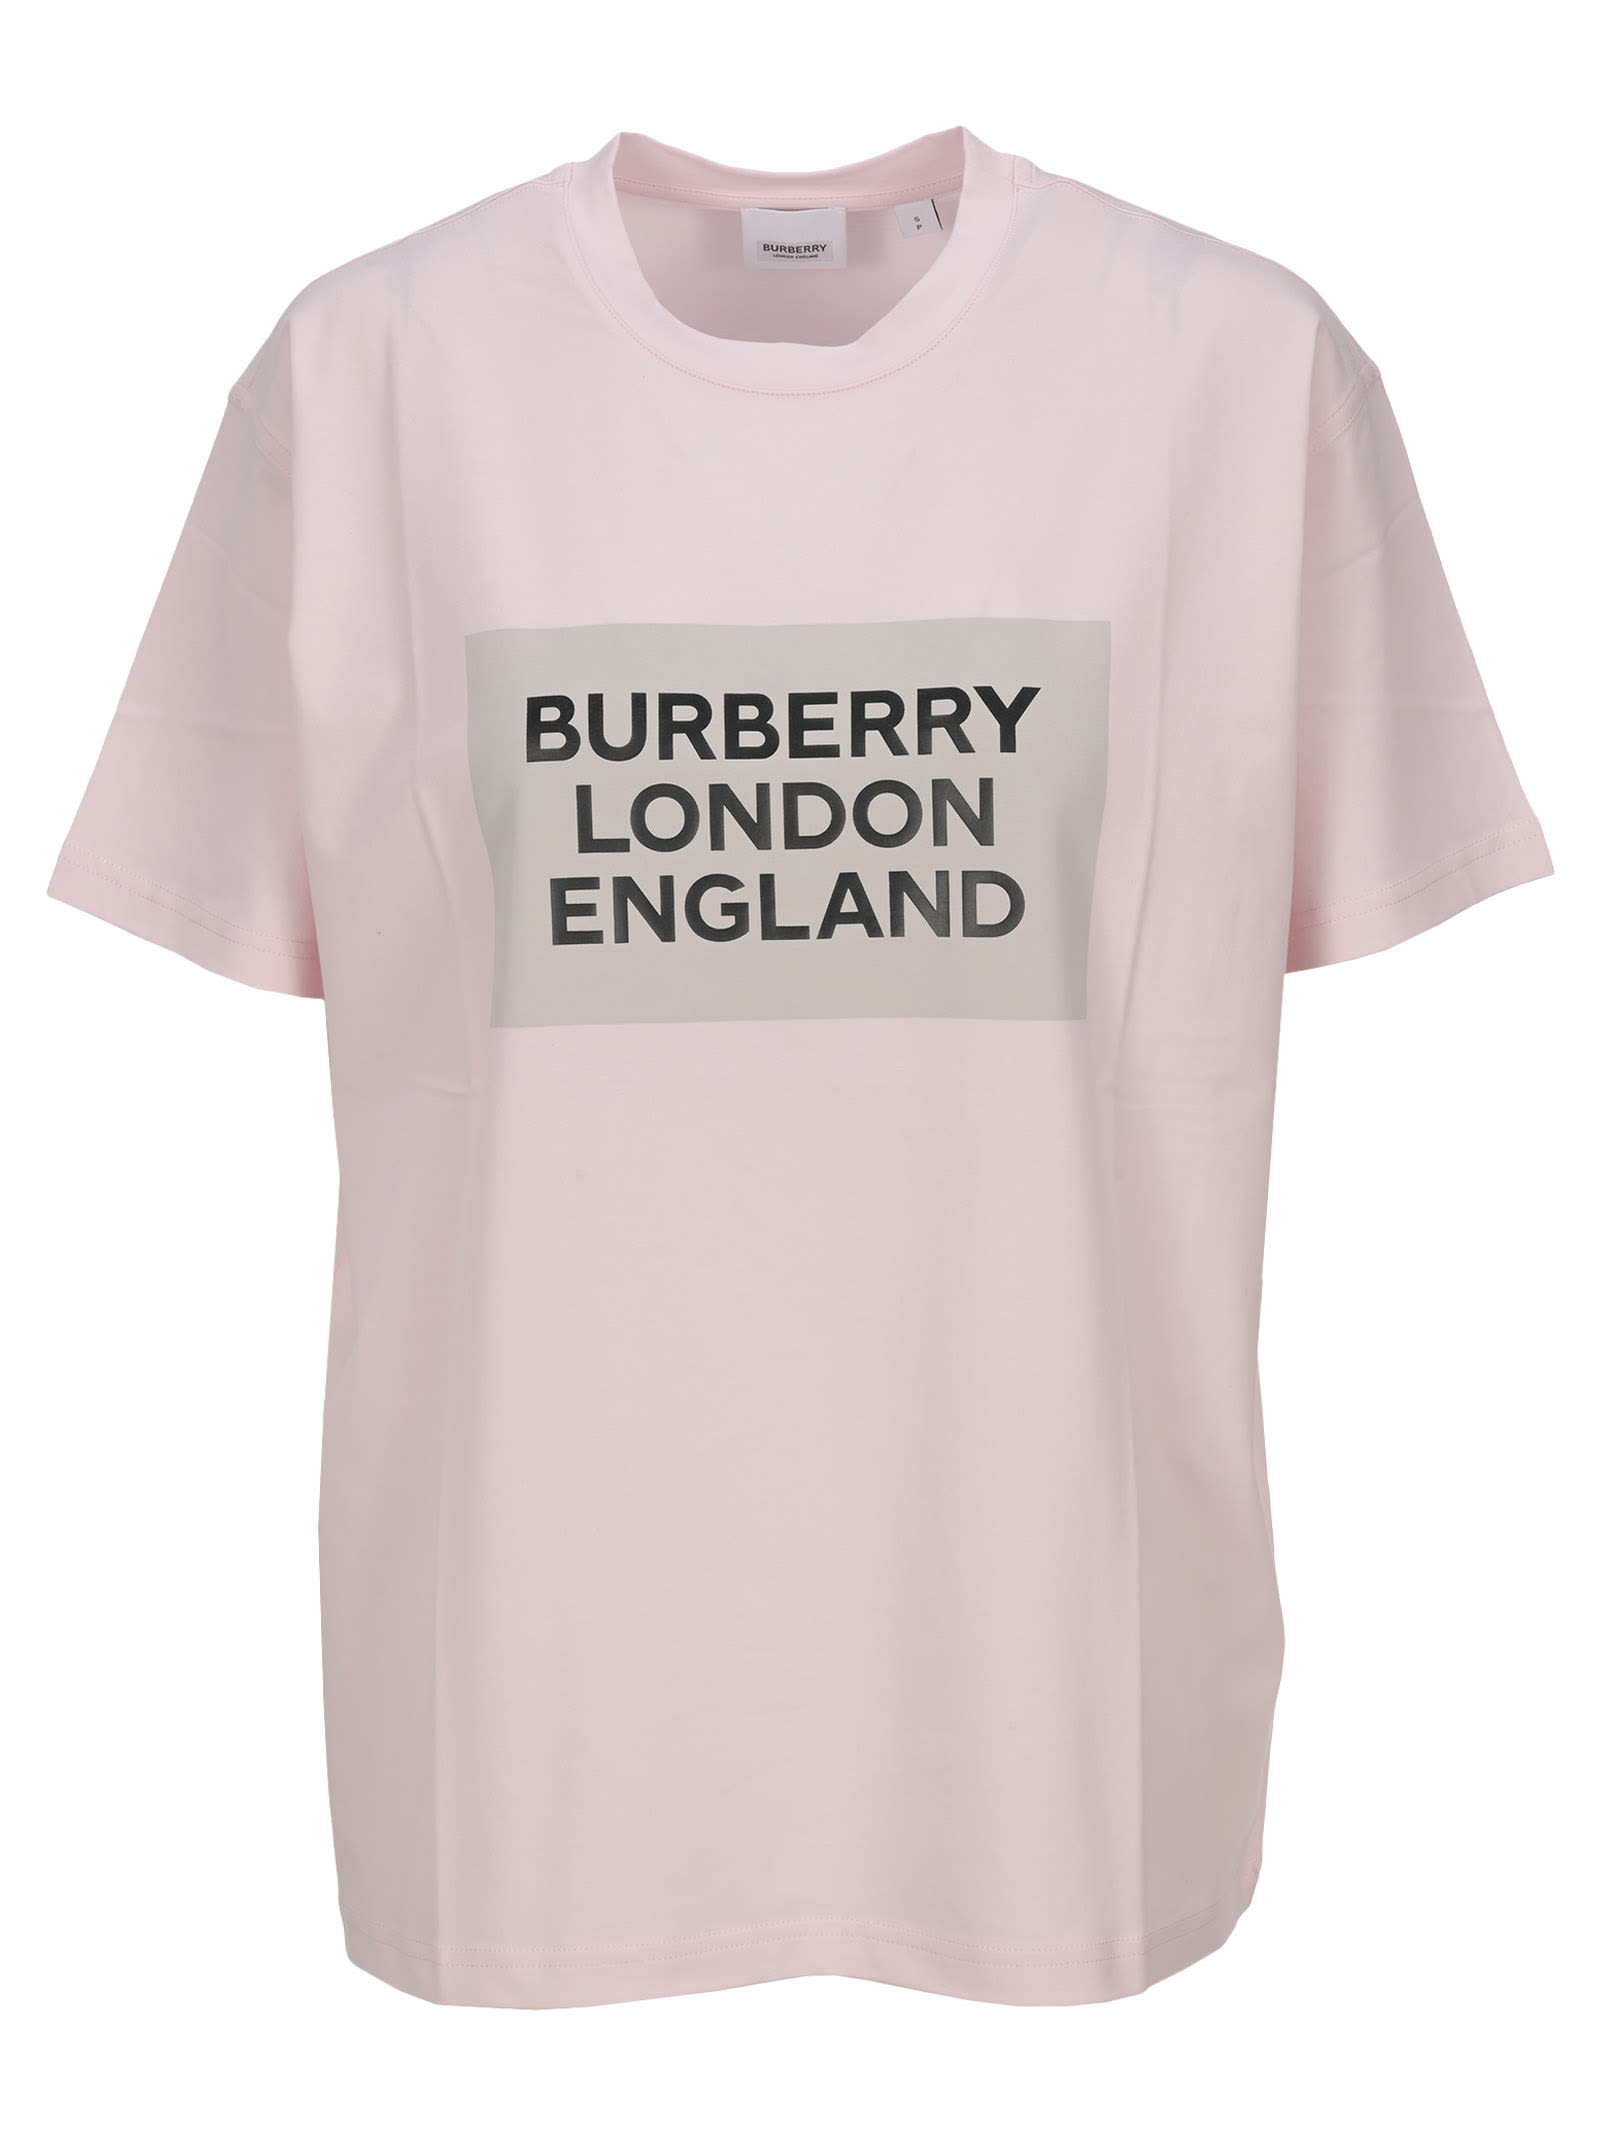 burberry london england t shirt